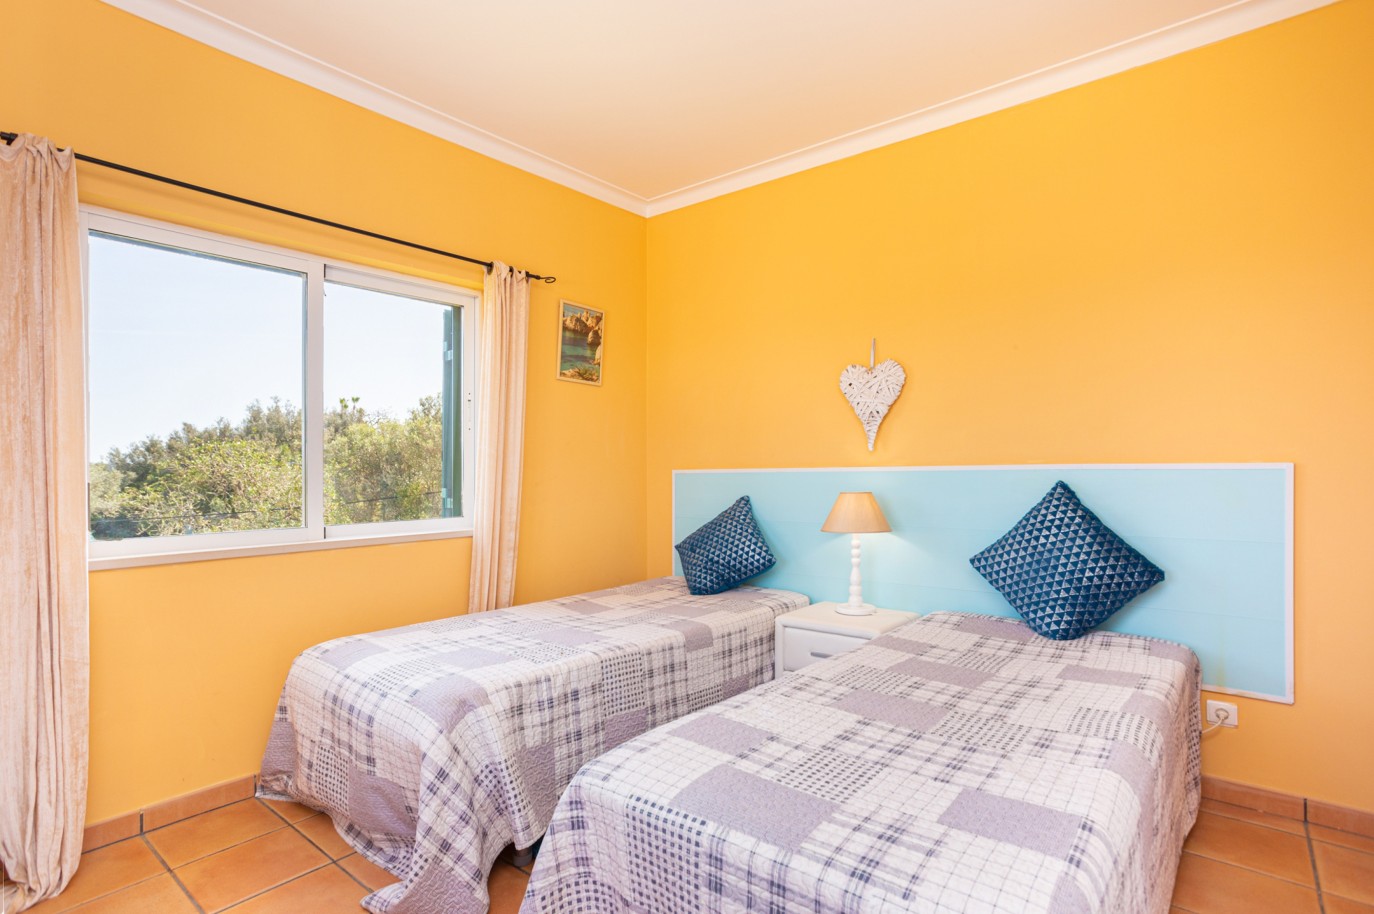 5 Bedroom Villa with 2 Bedroom Annex, for sale, in Alvor, Algarve_220971